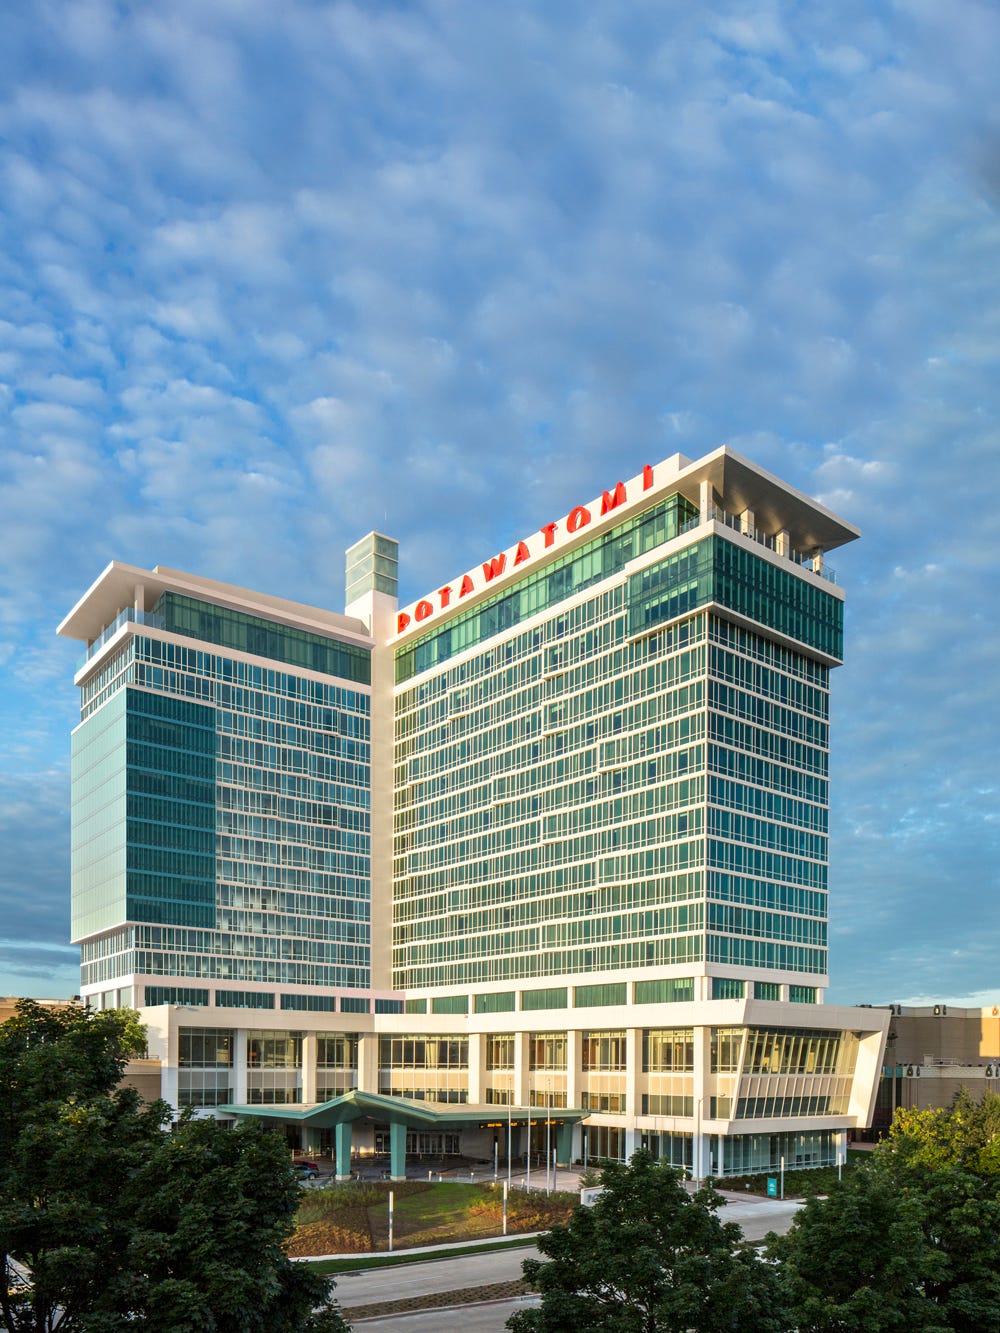 potawatomi hotel casino address